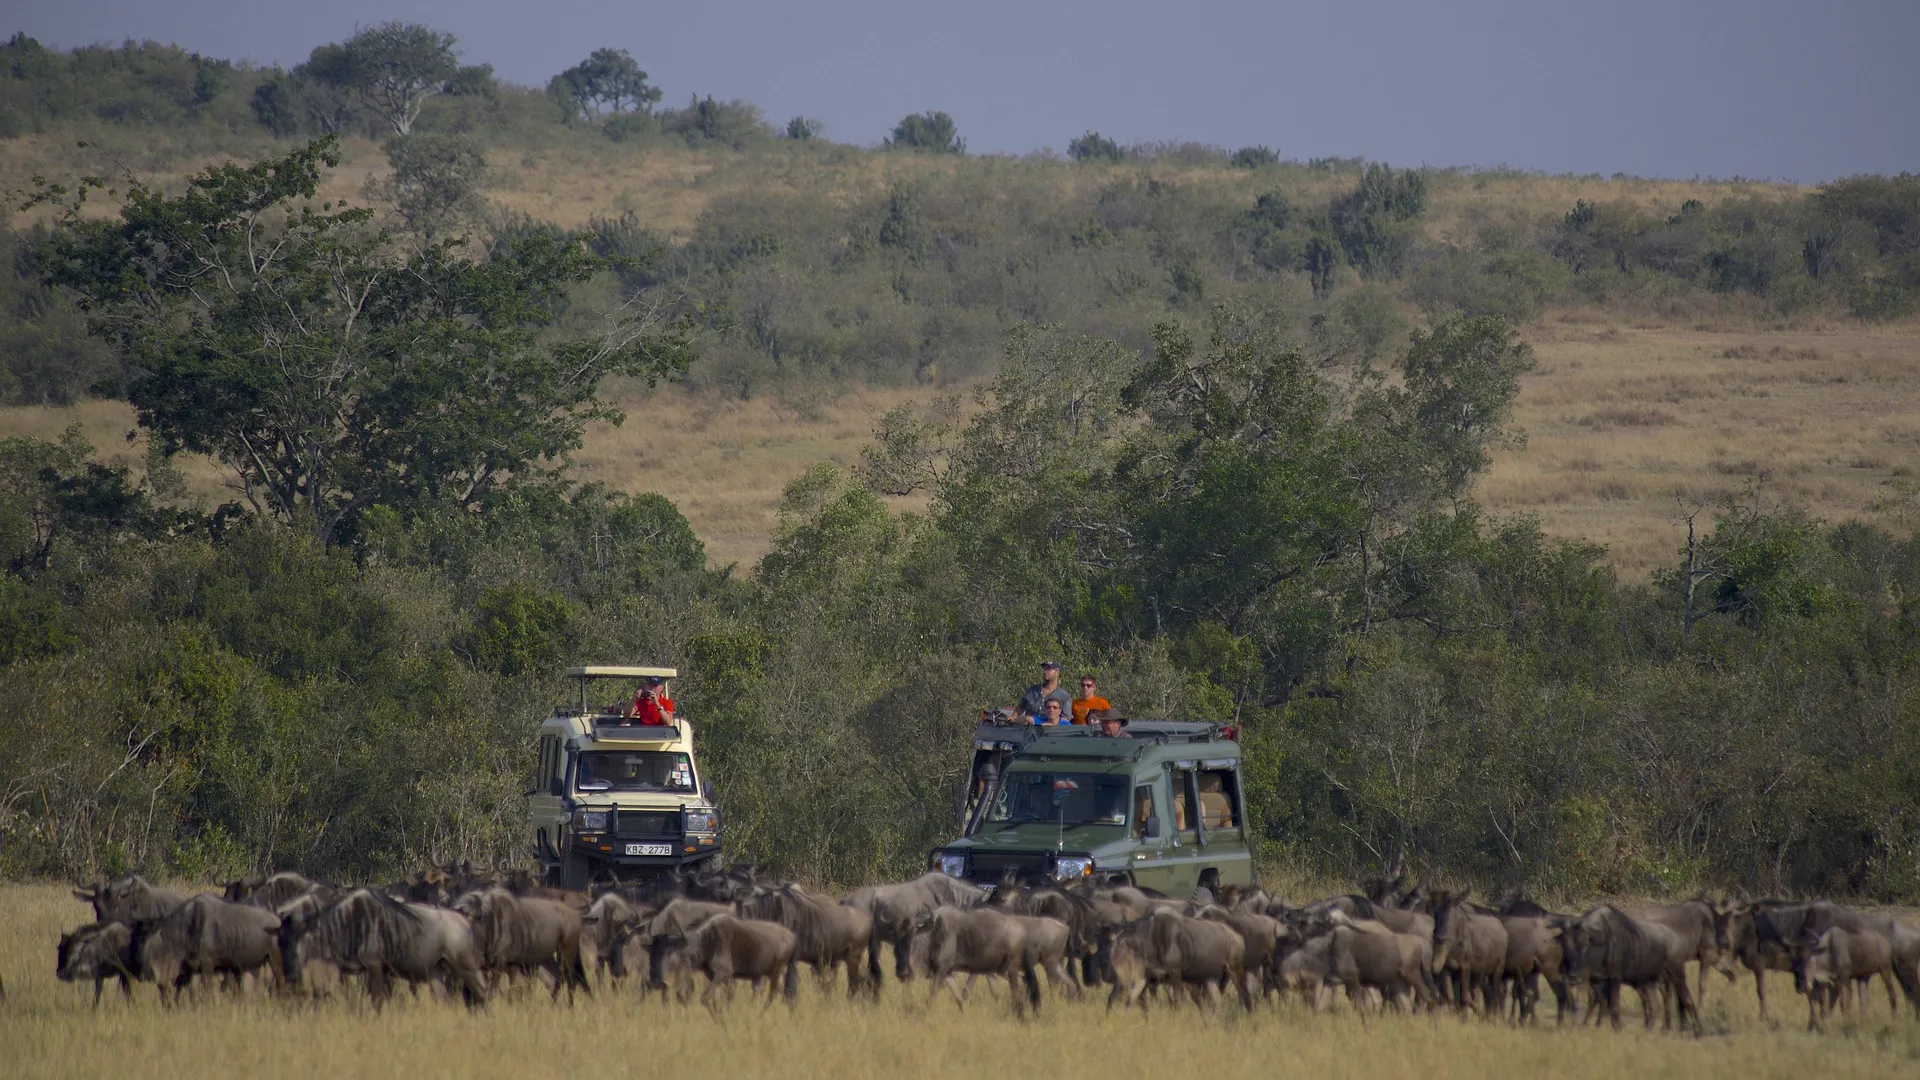 tour packages in Kenya - wildebeest